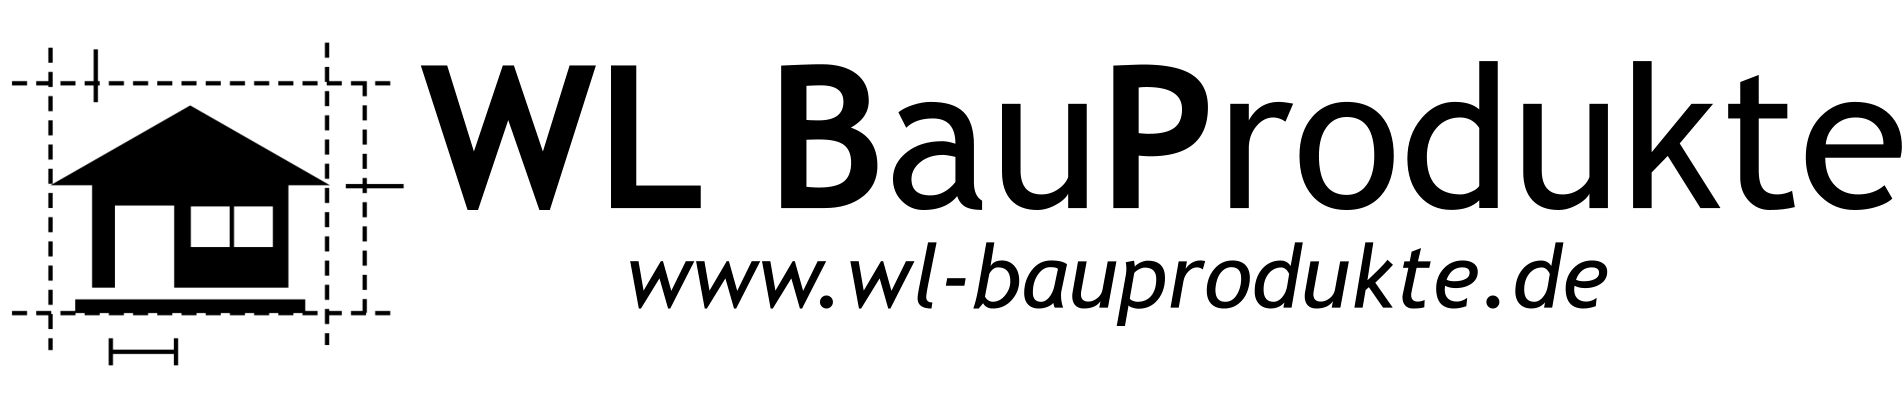 WL BauProdukte-Logo